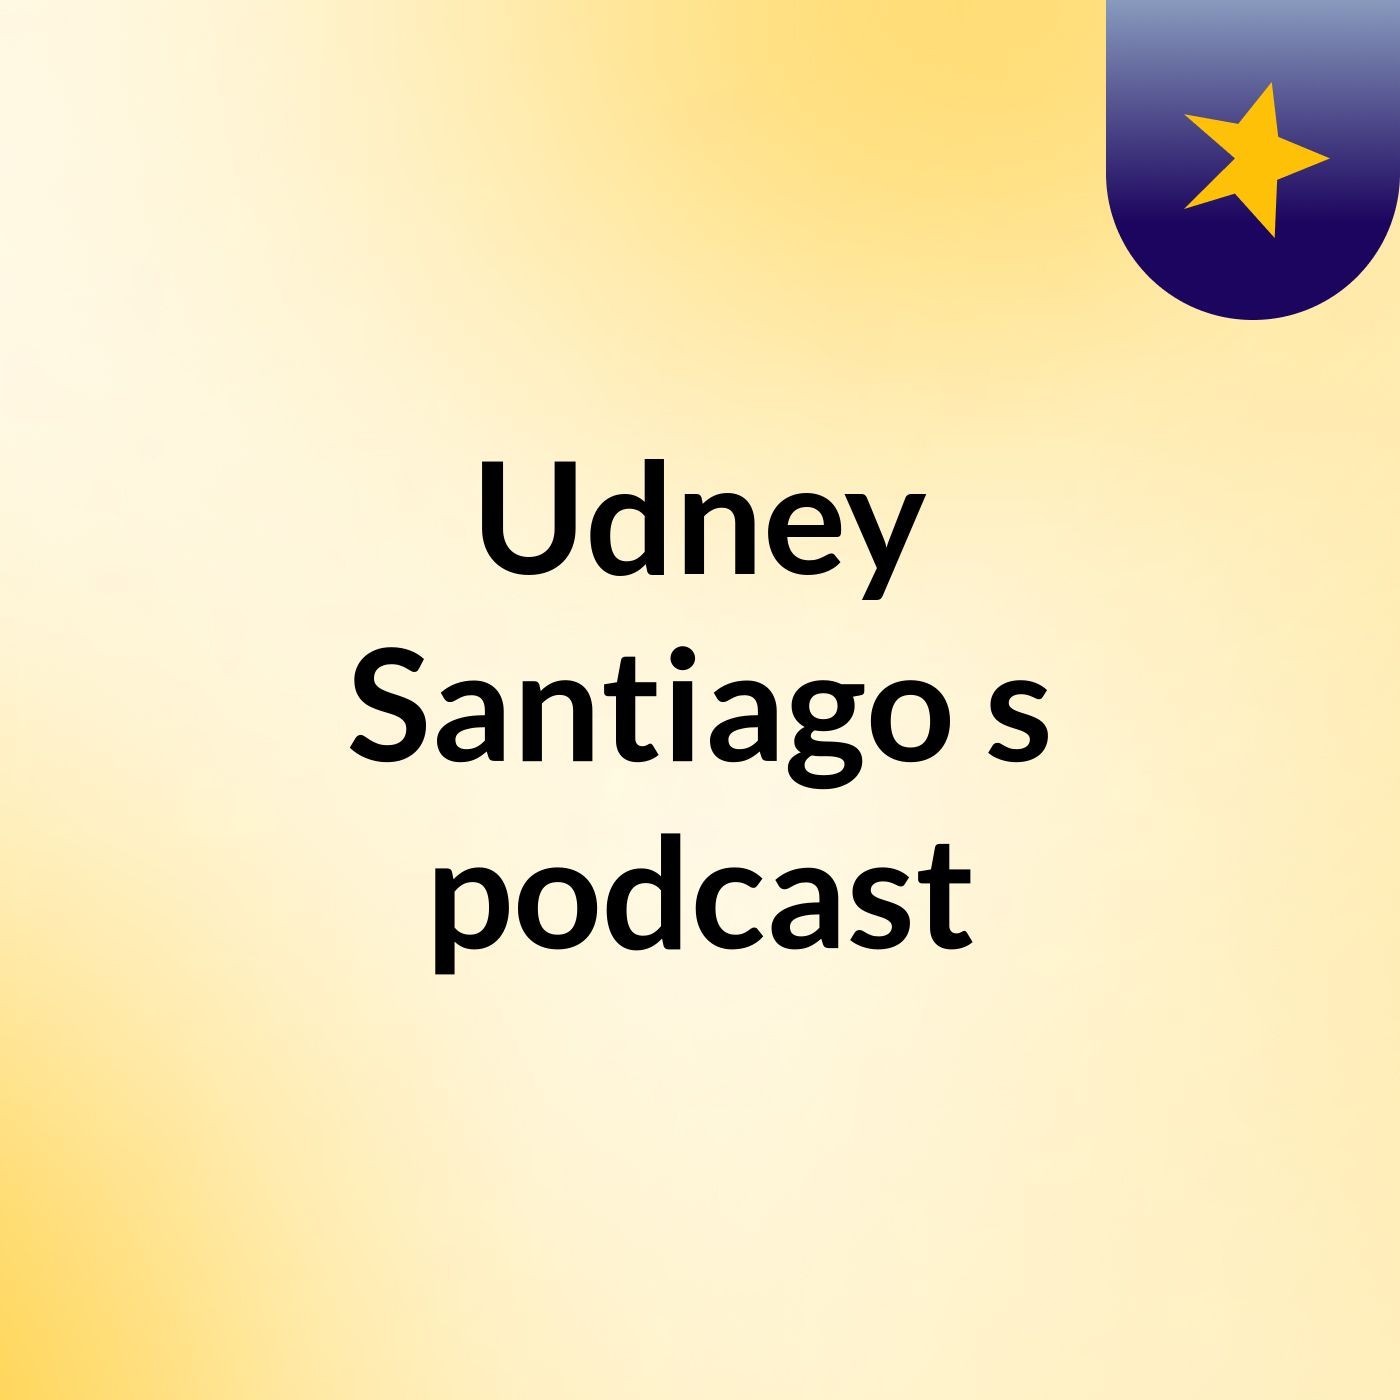 Episódio 11 - Udney Santiago's podcast